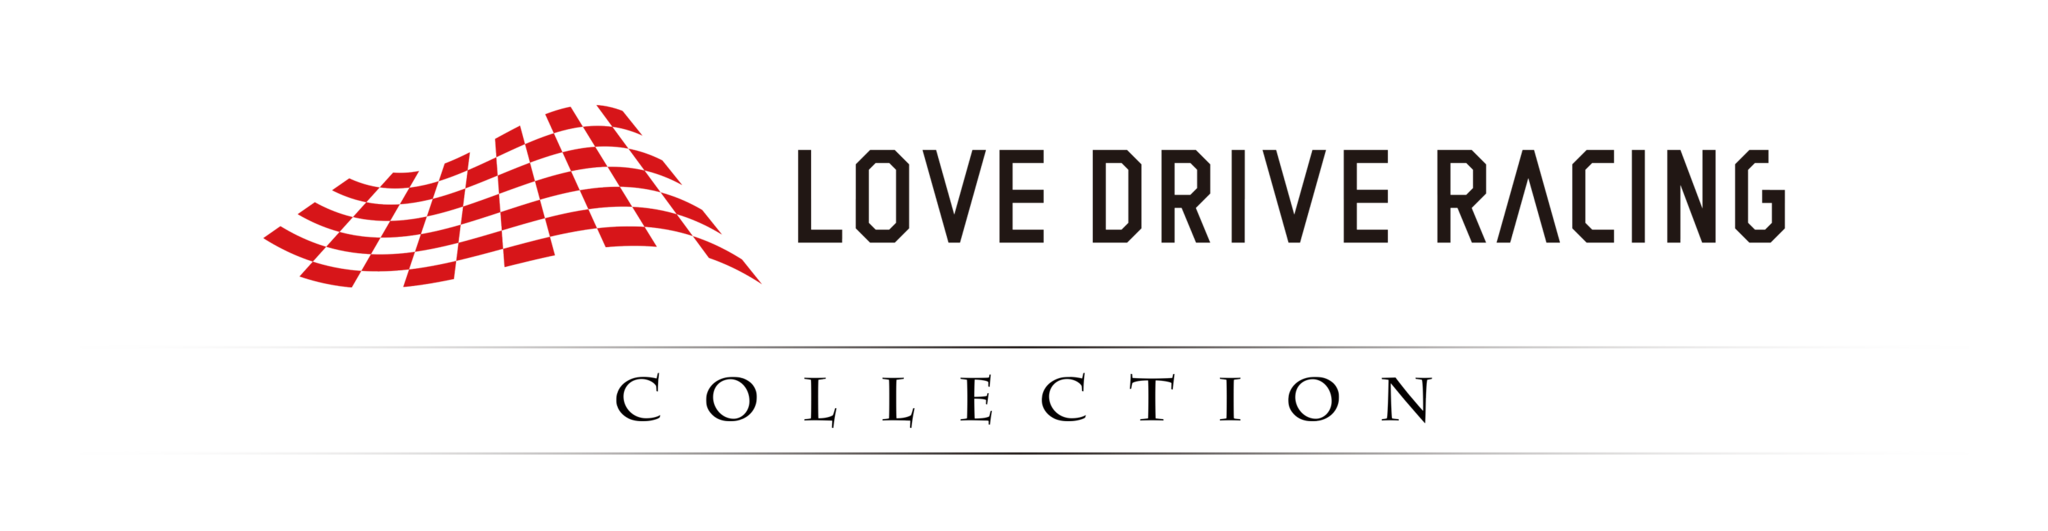 Love drive